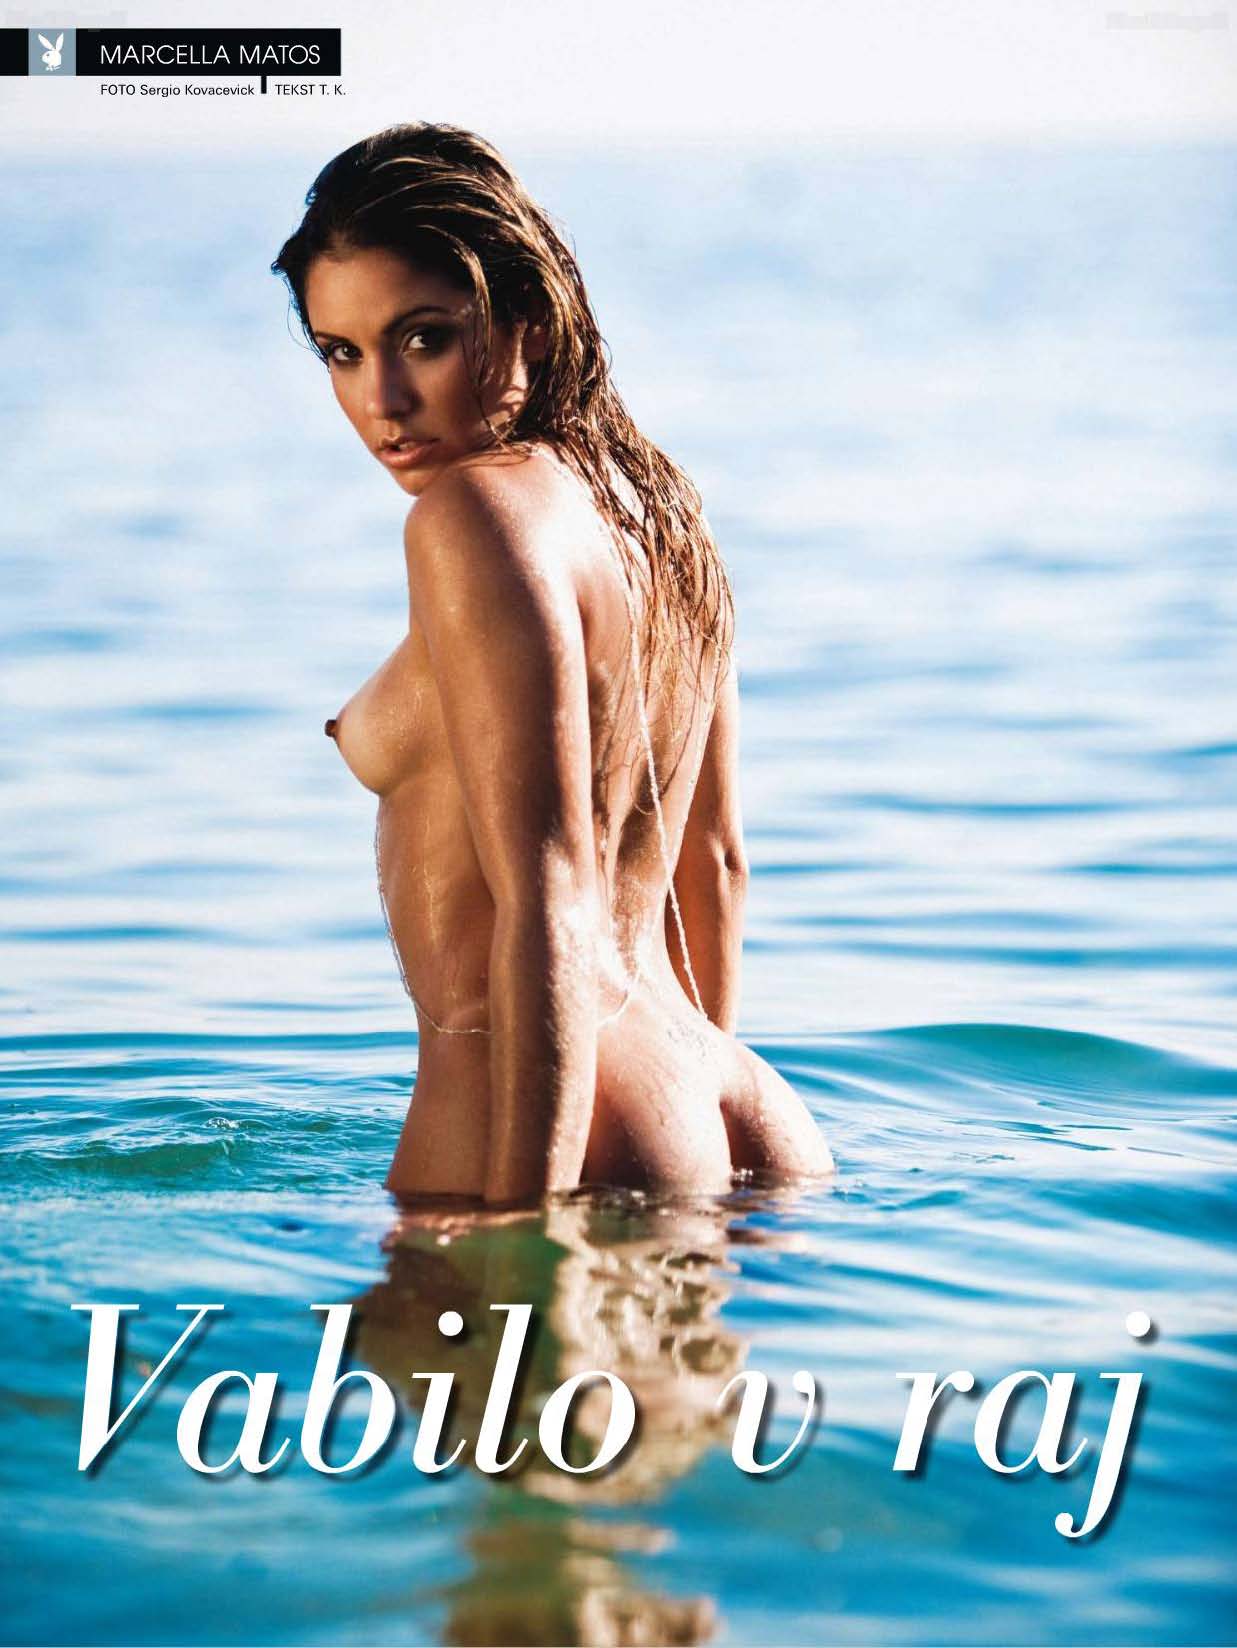 Marcella Matos naked in Playboy Slovenia October 2010